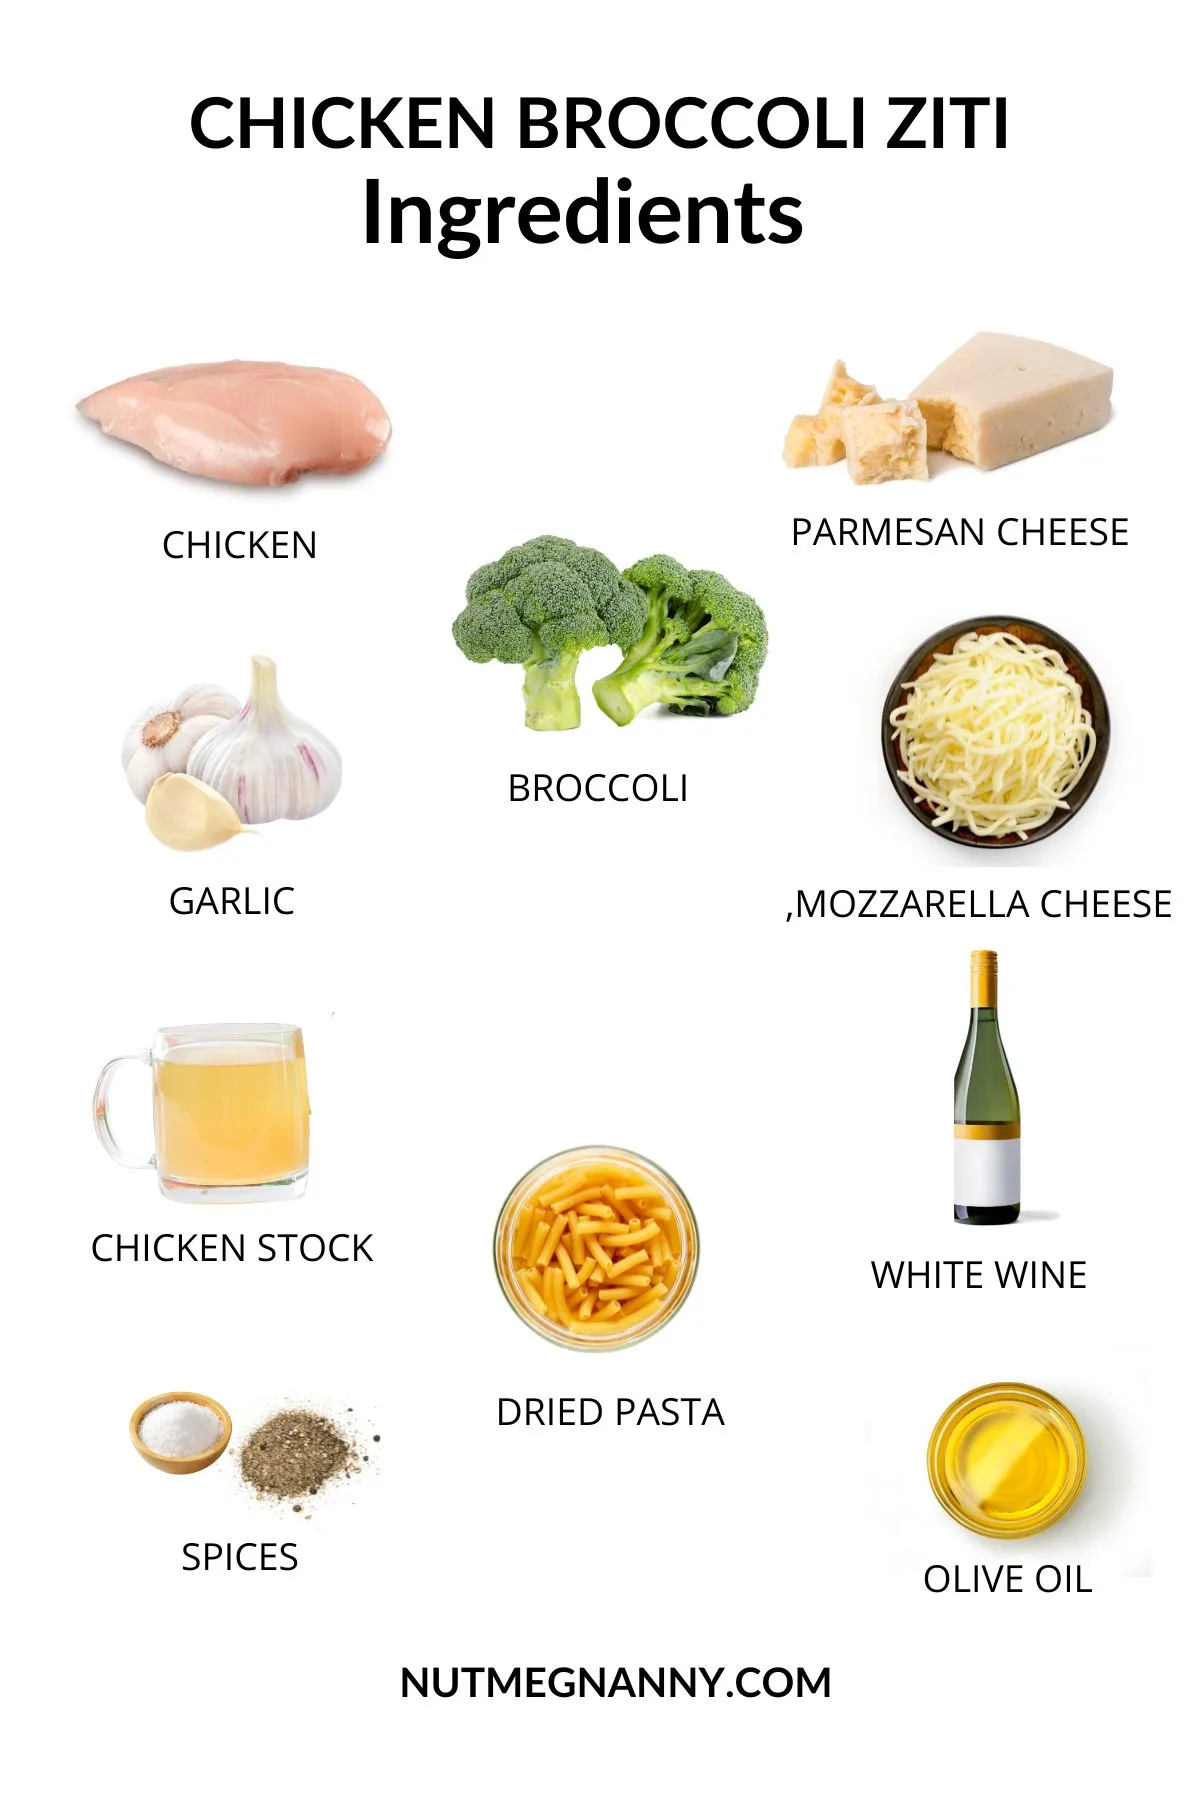 Chicken Broccoli Ziti ingredients poster. 